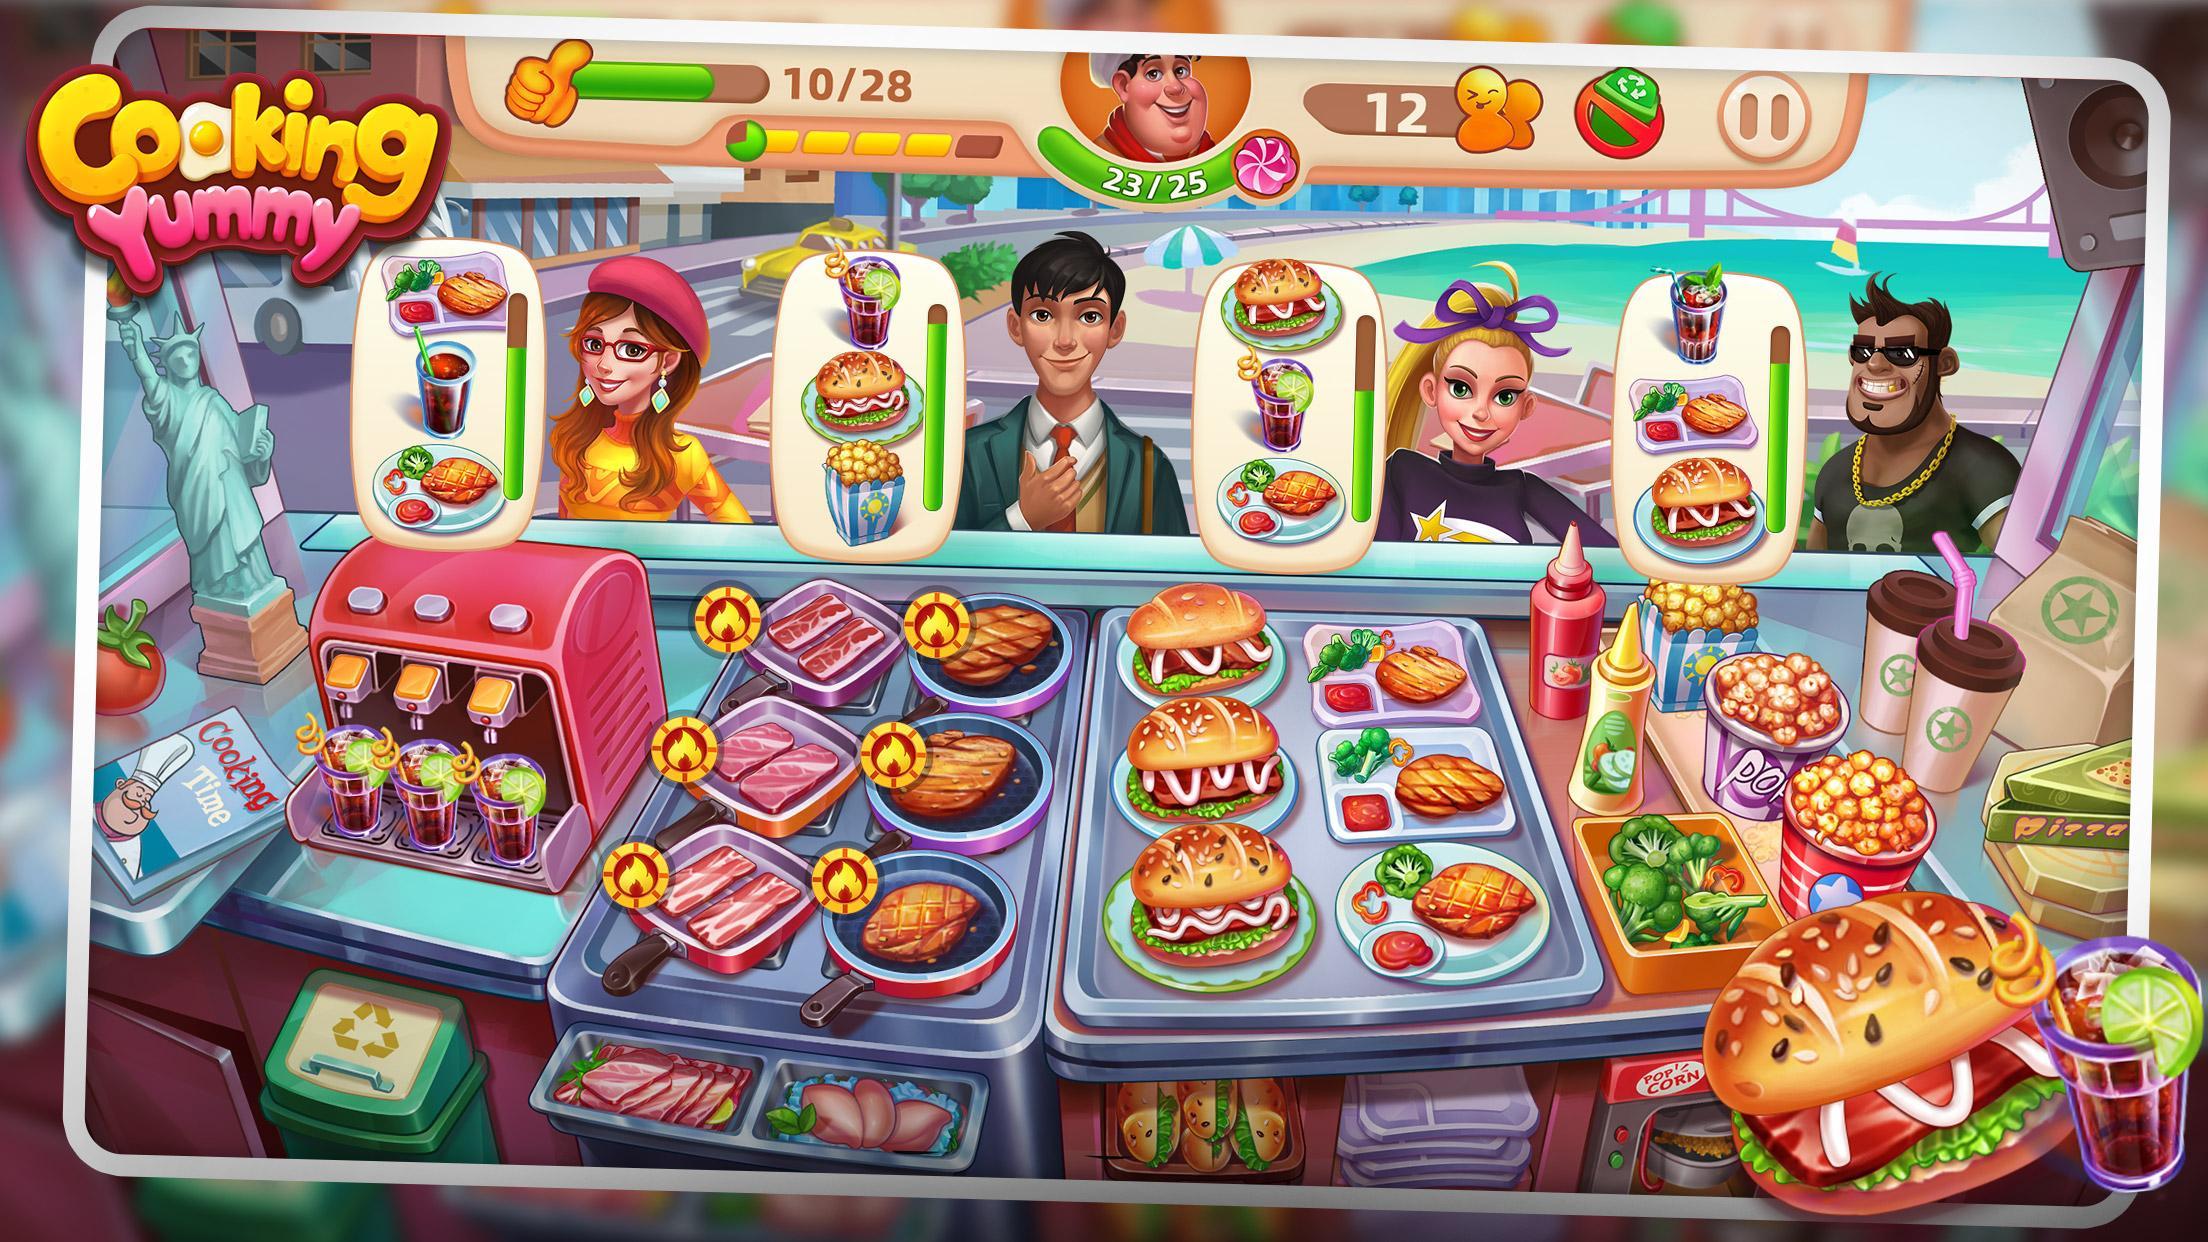 Screenshot 1 of Cooking Yummy-Restaurant Game 3.1.6.5093